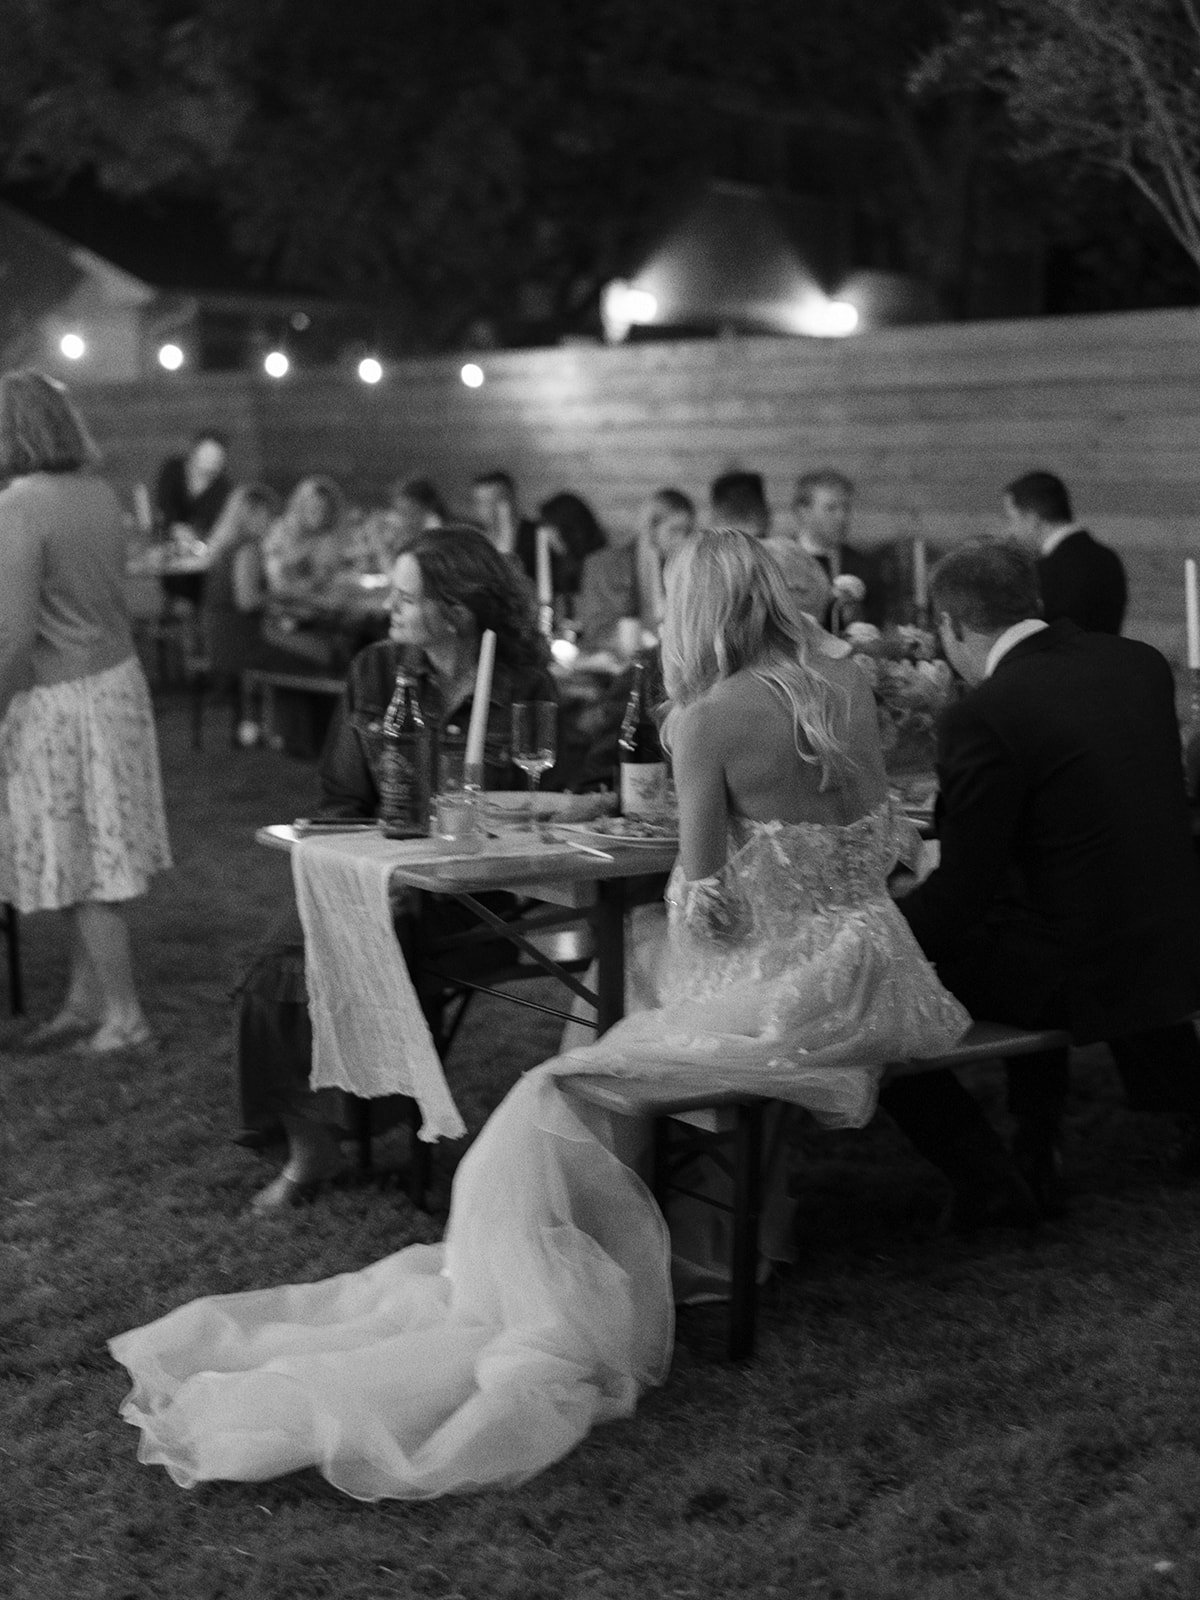 Best-Austin-Wedding-Photographers-Elopement-Film-35mm-Asheville-Santa-Barbara-Backyard-174.jpg